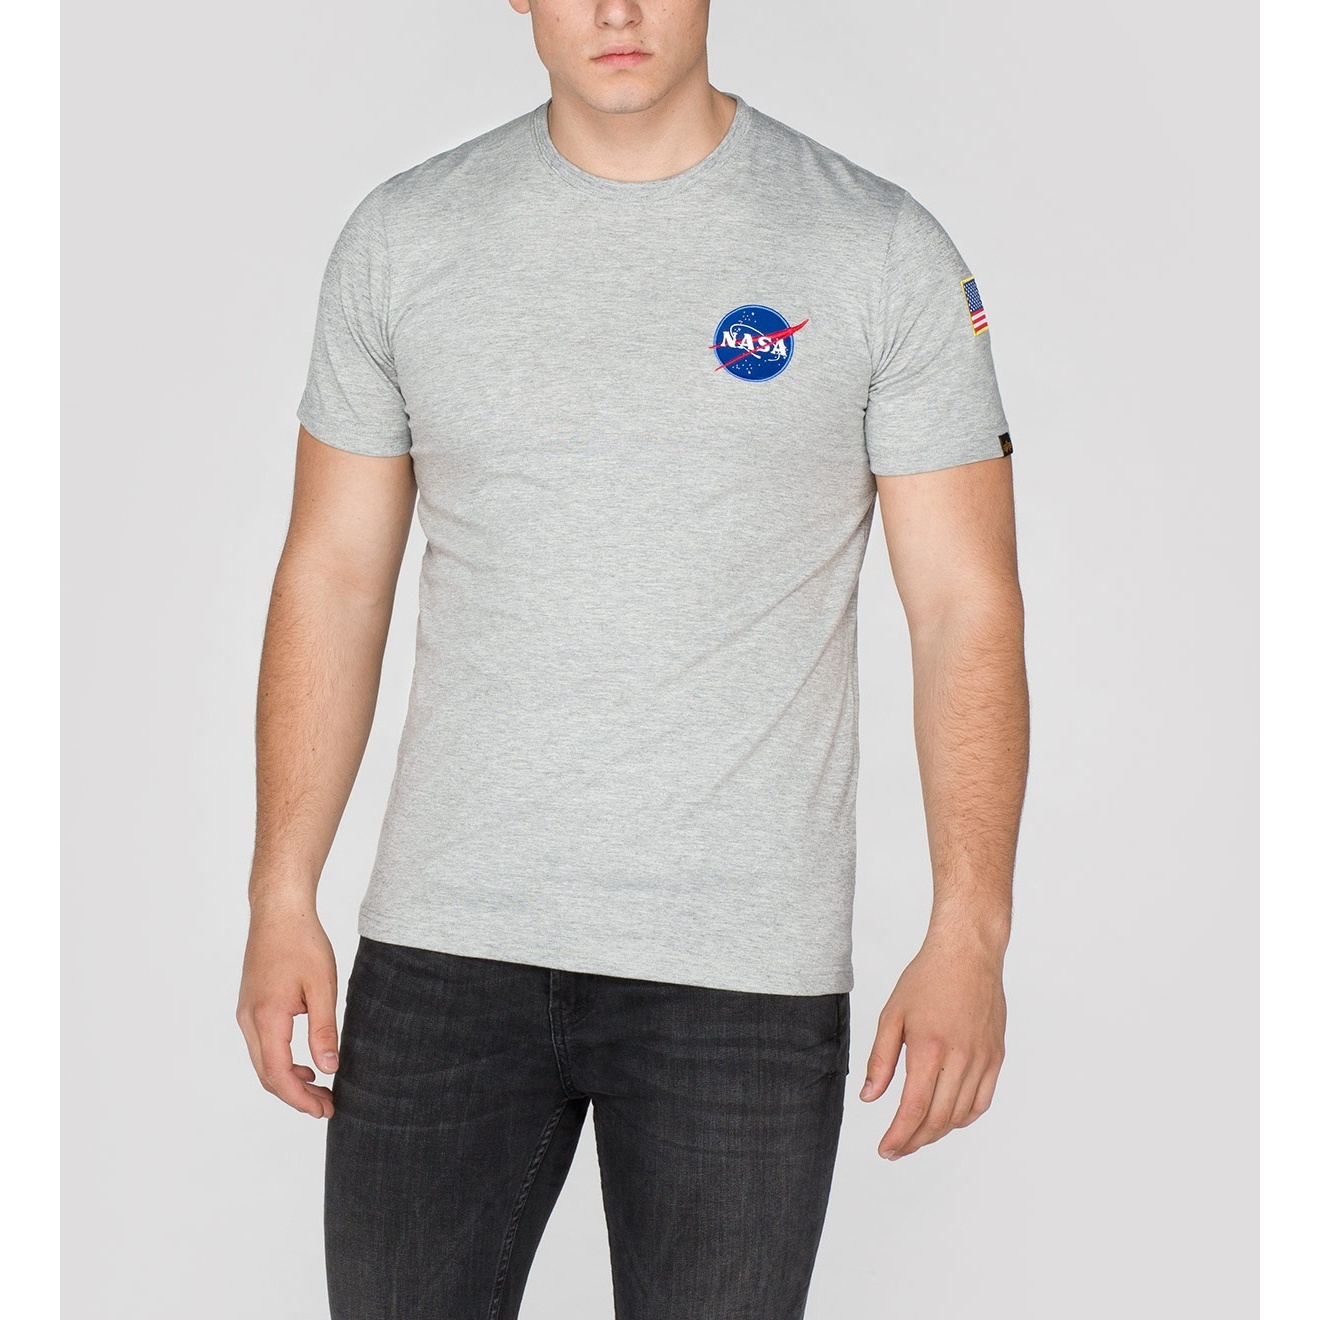 tričko SPACE SHUTTLE T grey heather